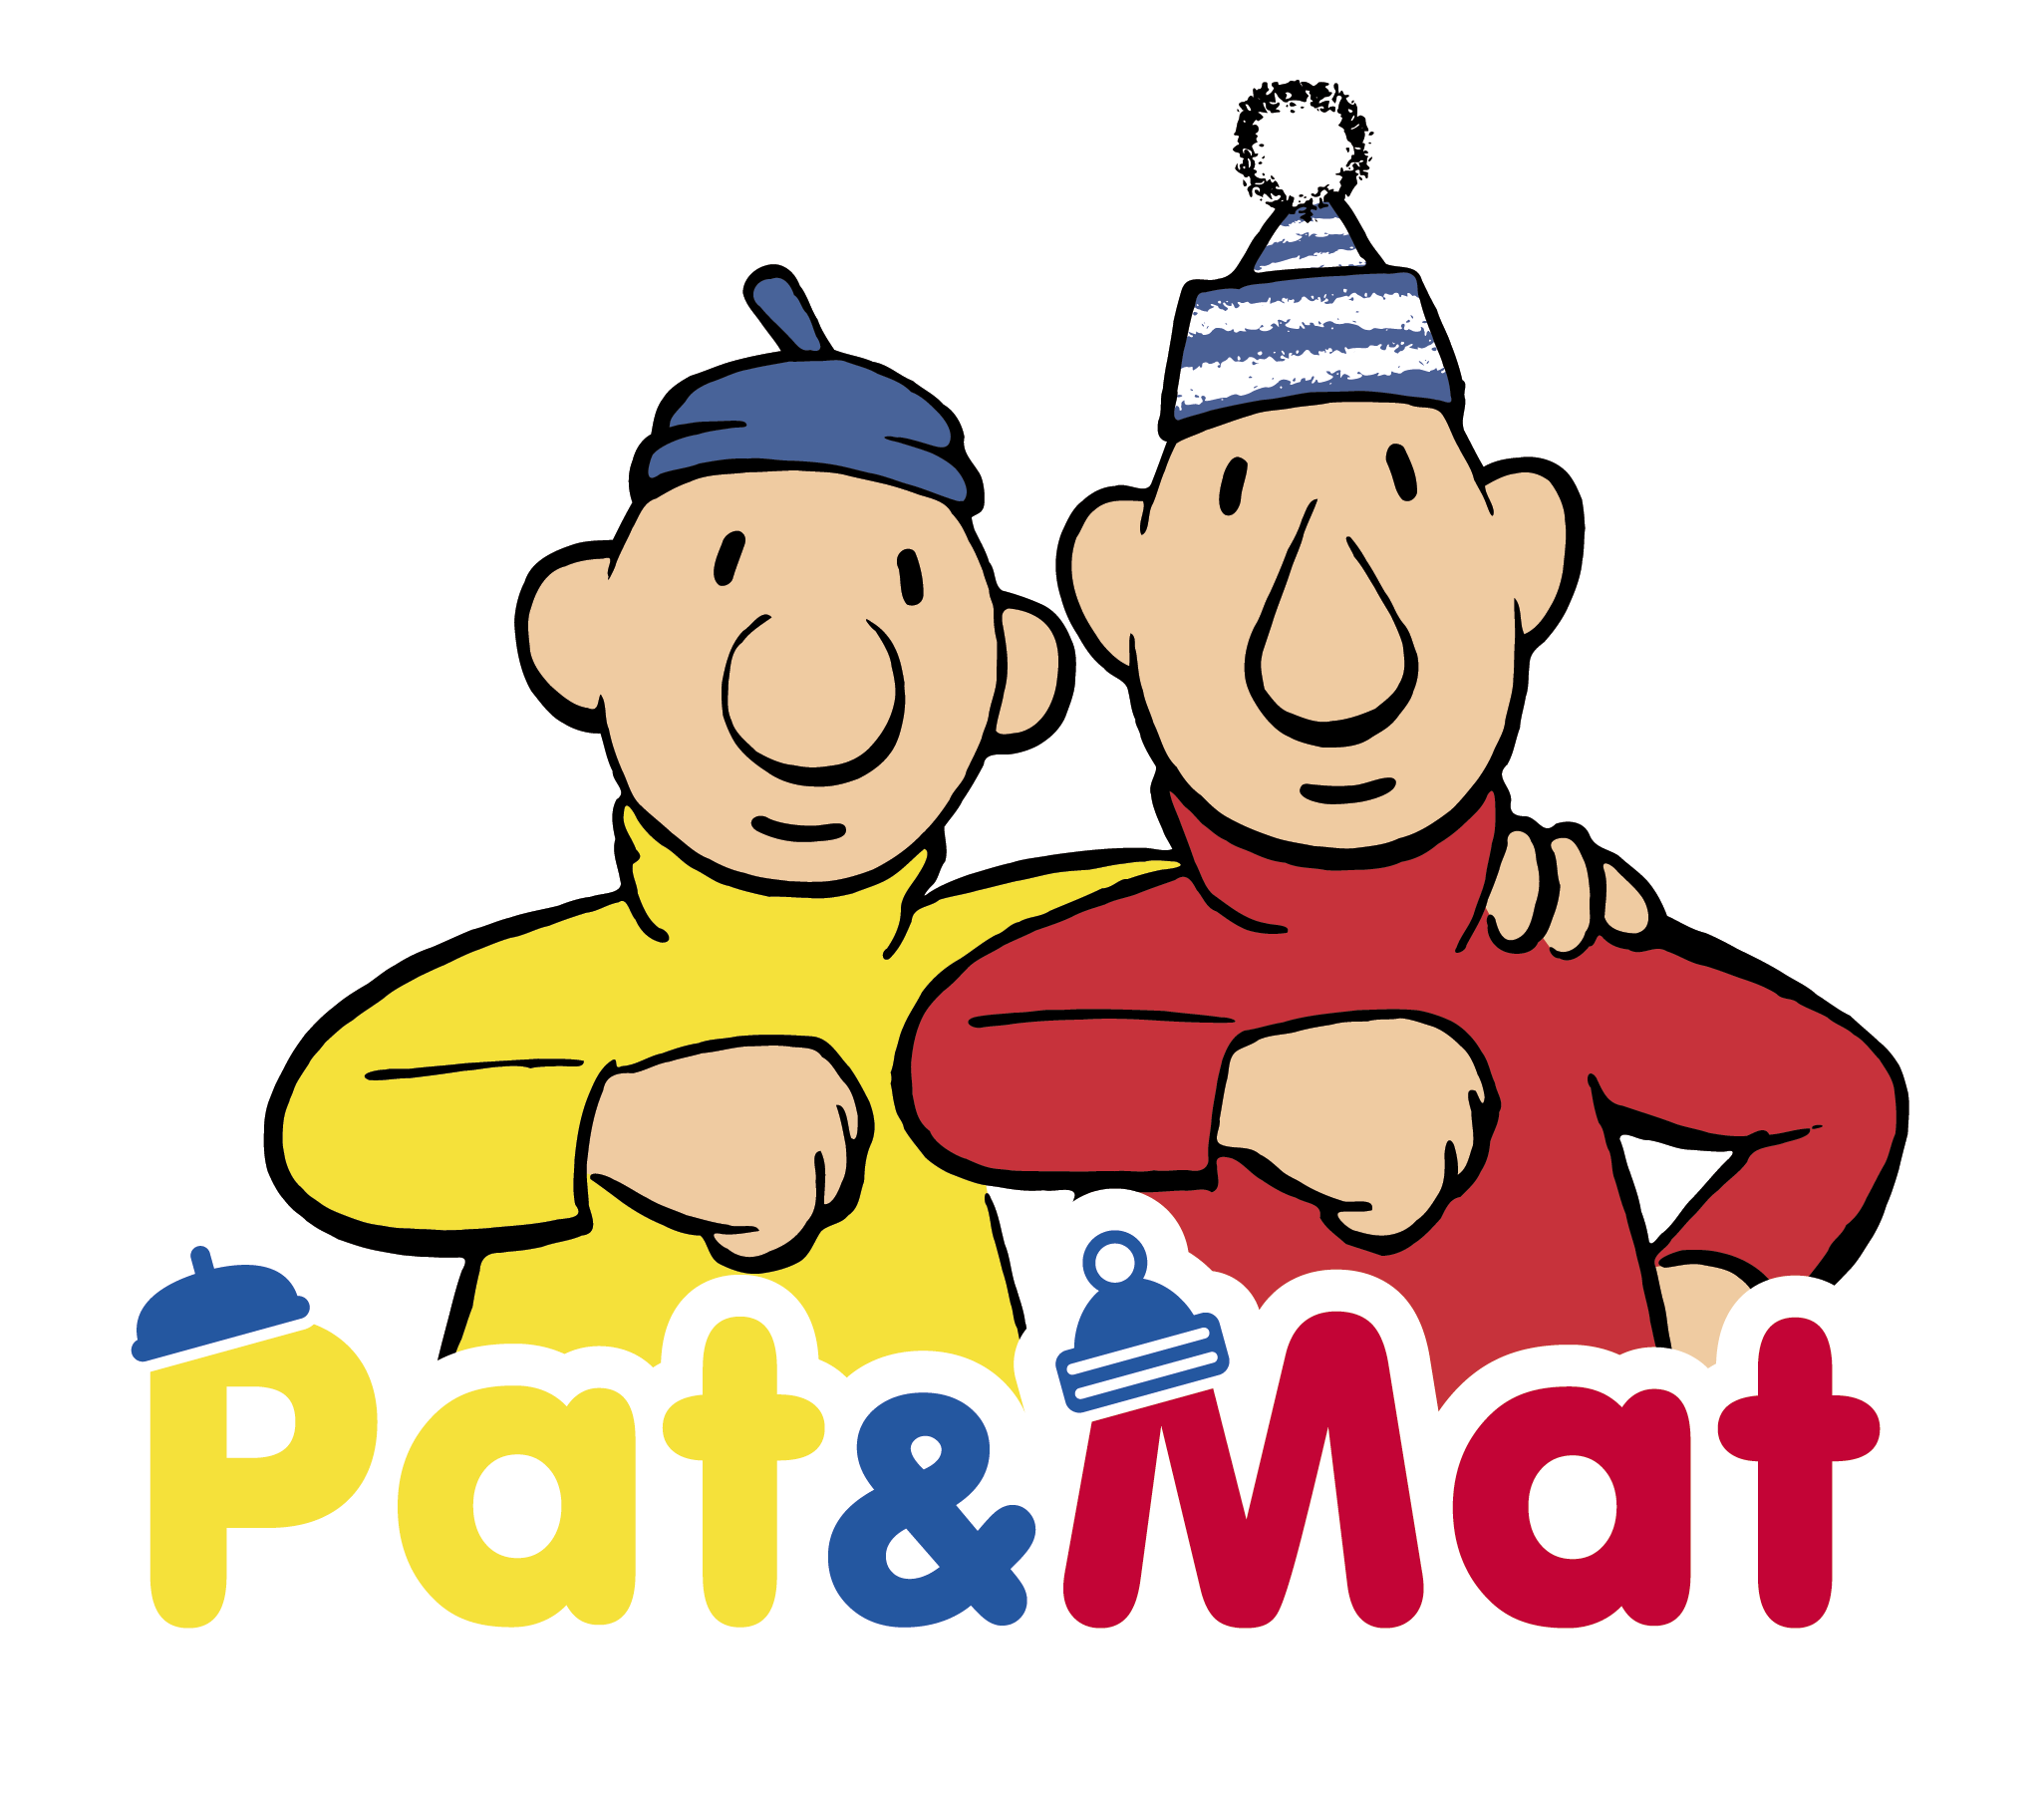 Hry Pat&Mat